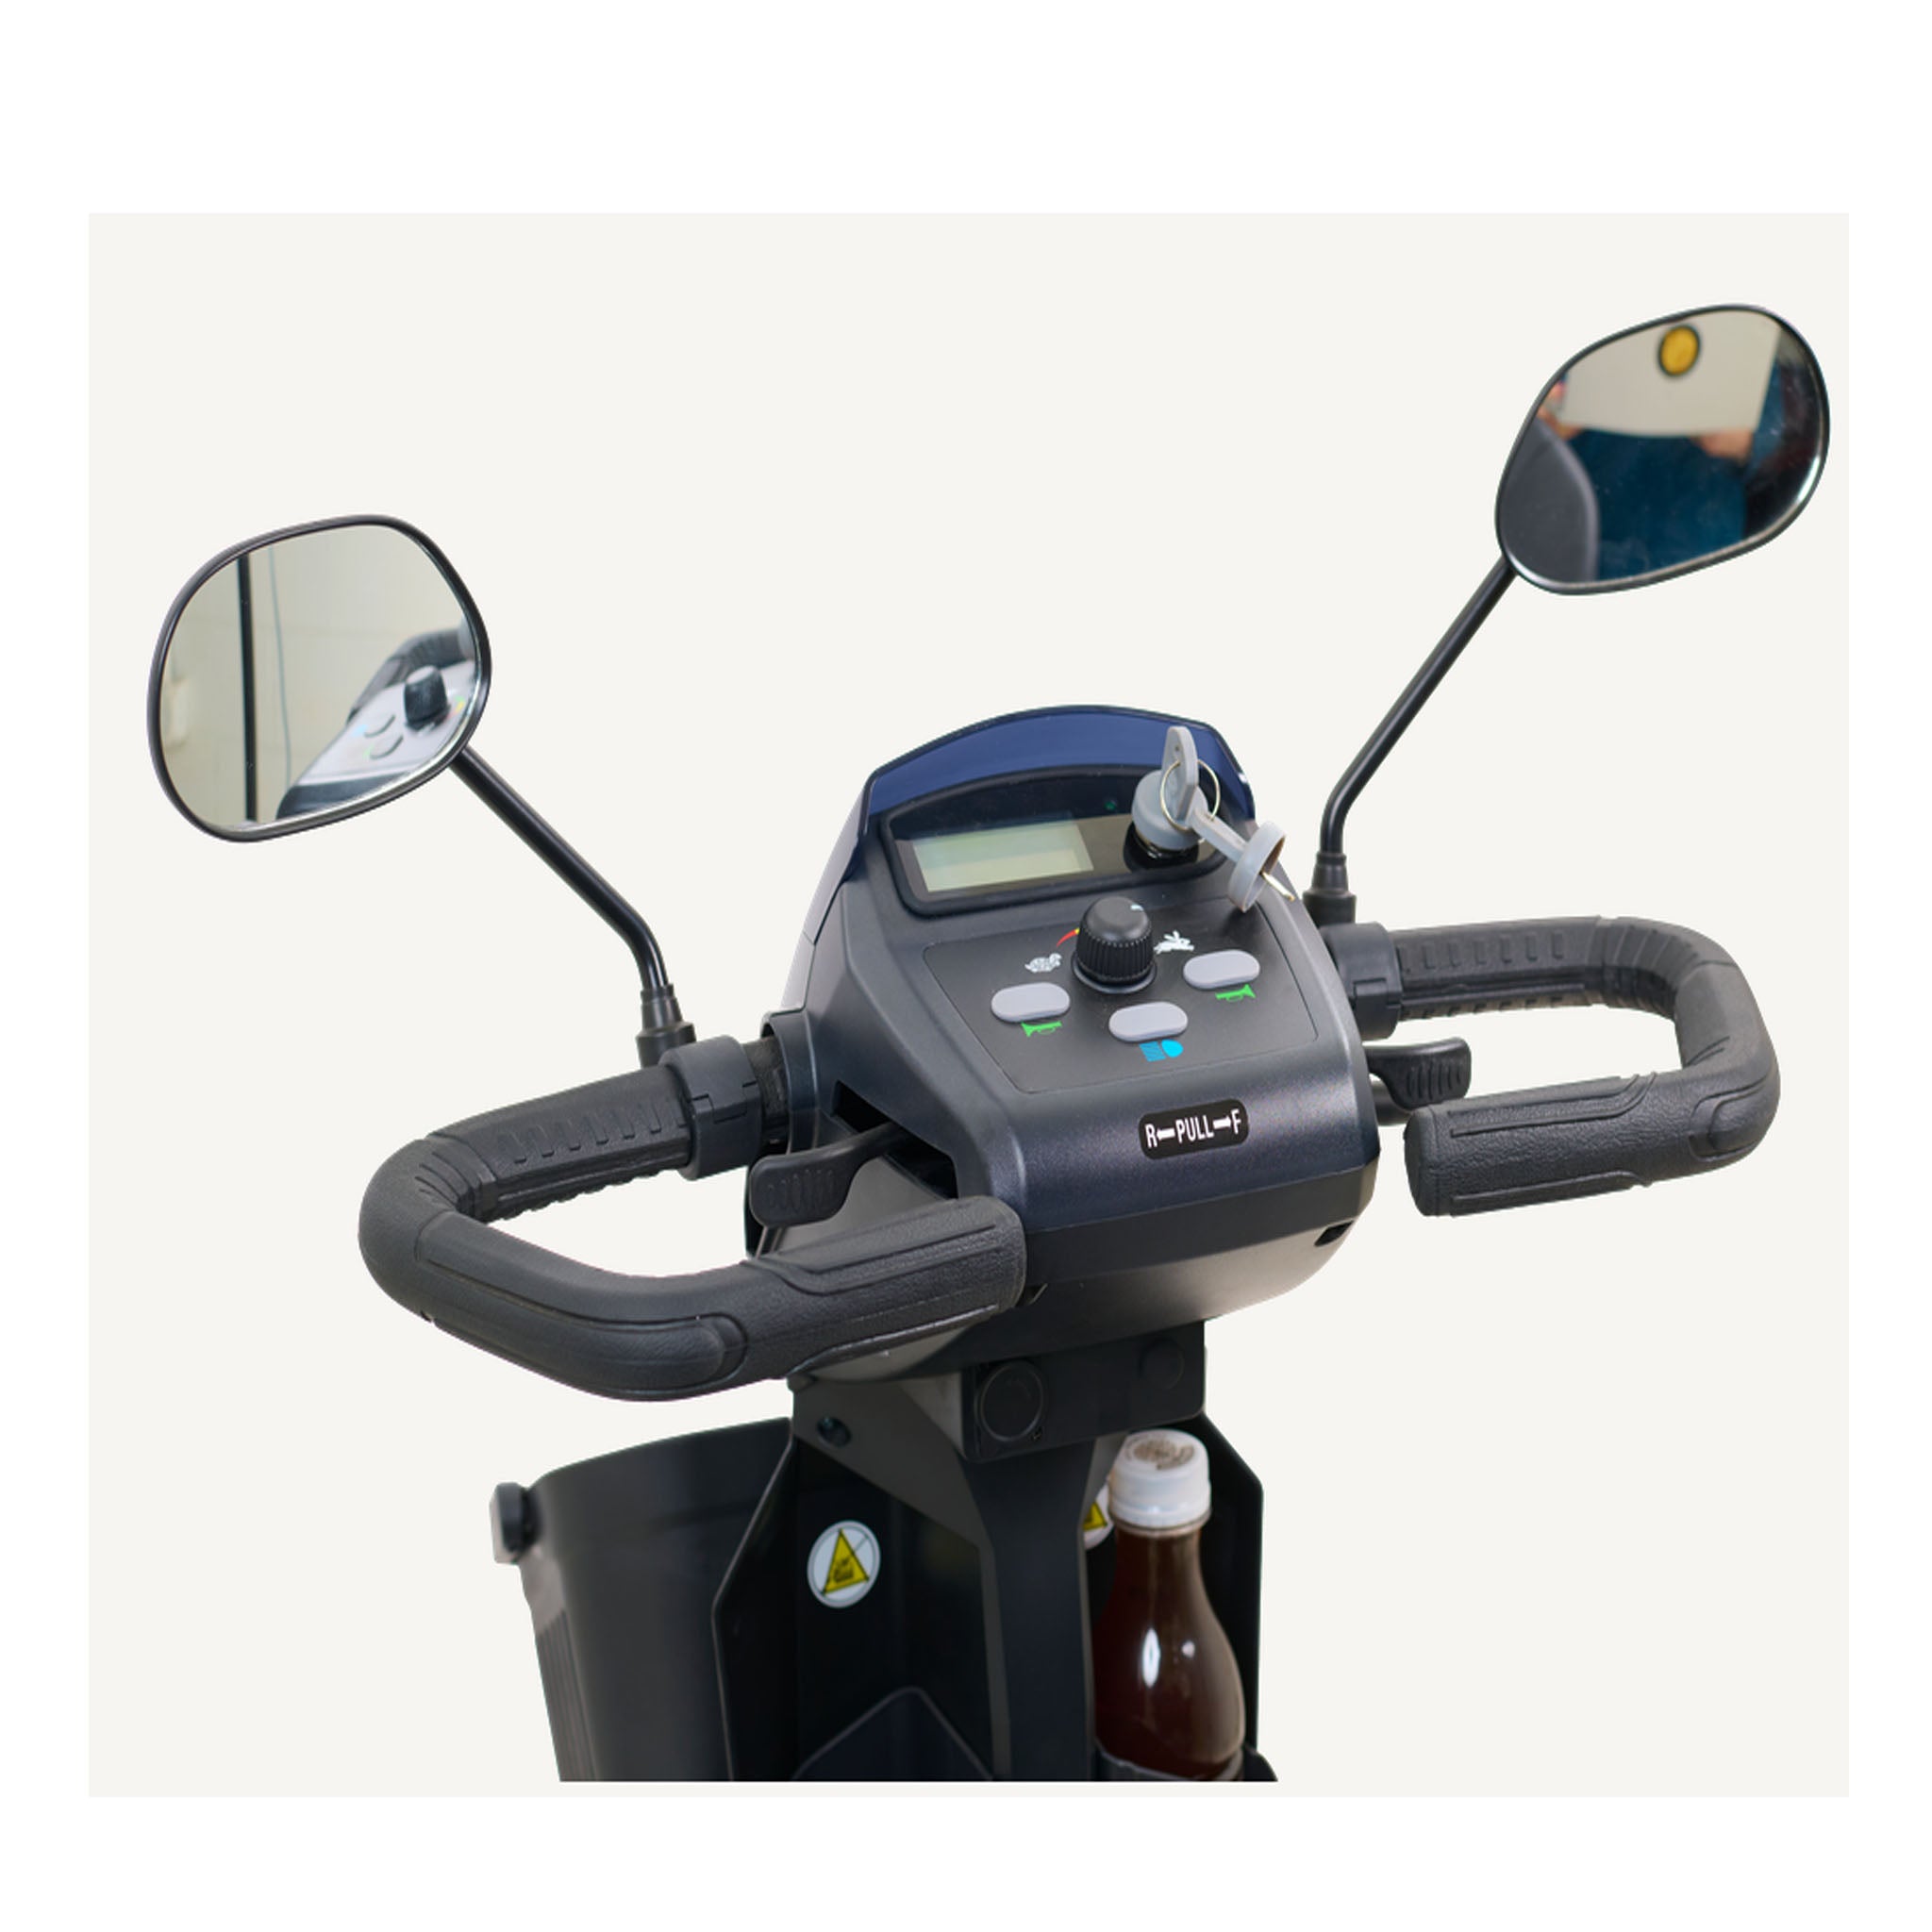 Golden Technologies Companion 4 Wheel Scooter